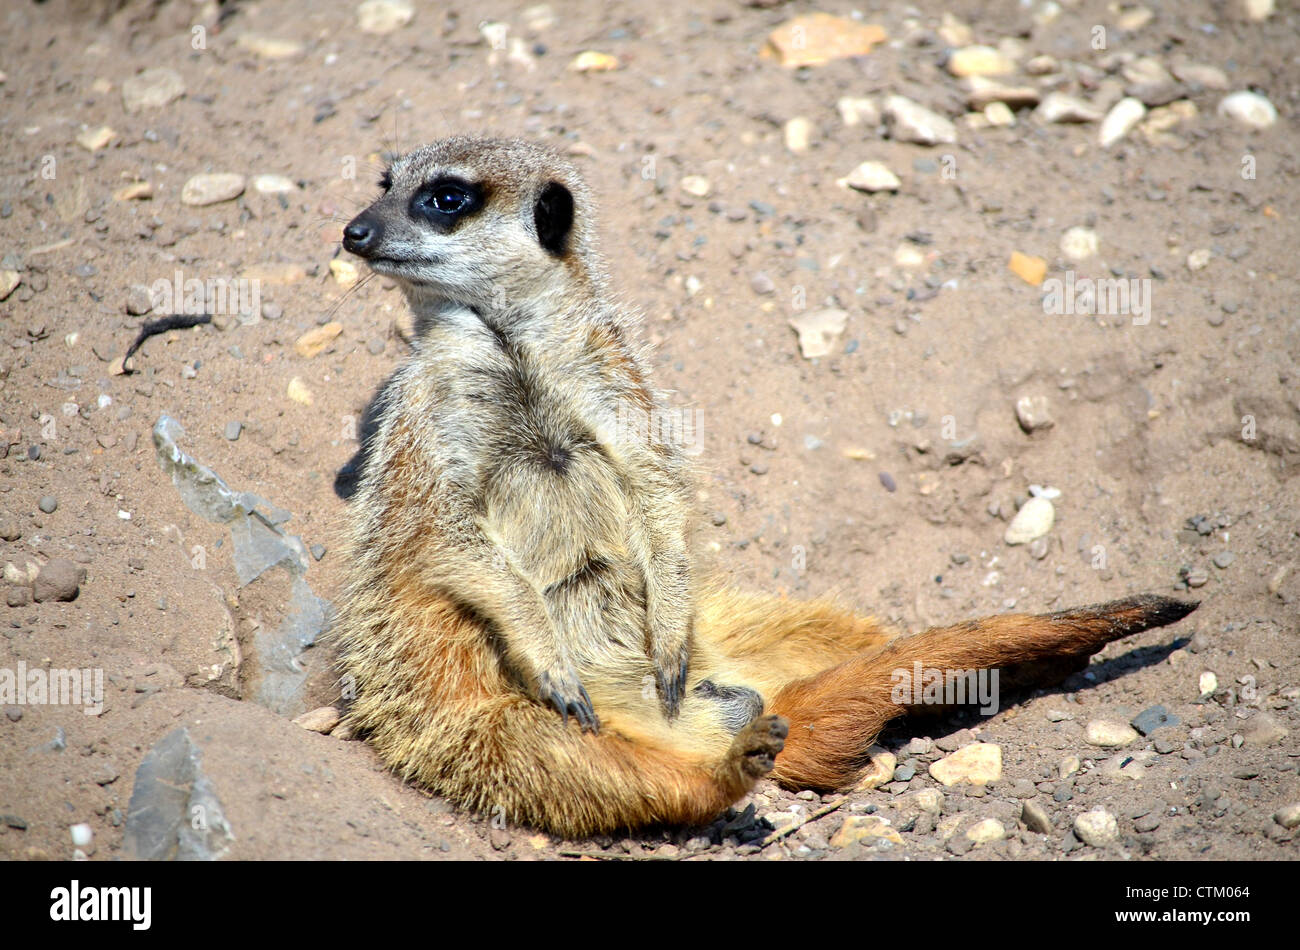 Meerkat or slender-tailed suricate sitting alert. Stock Photo